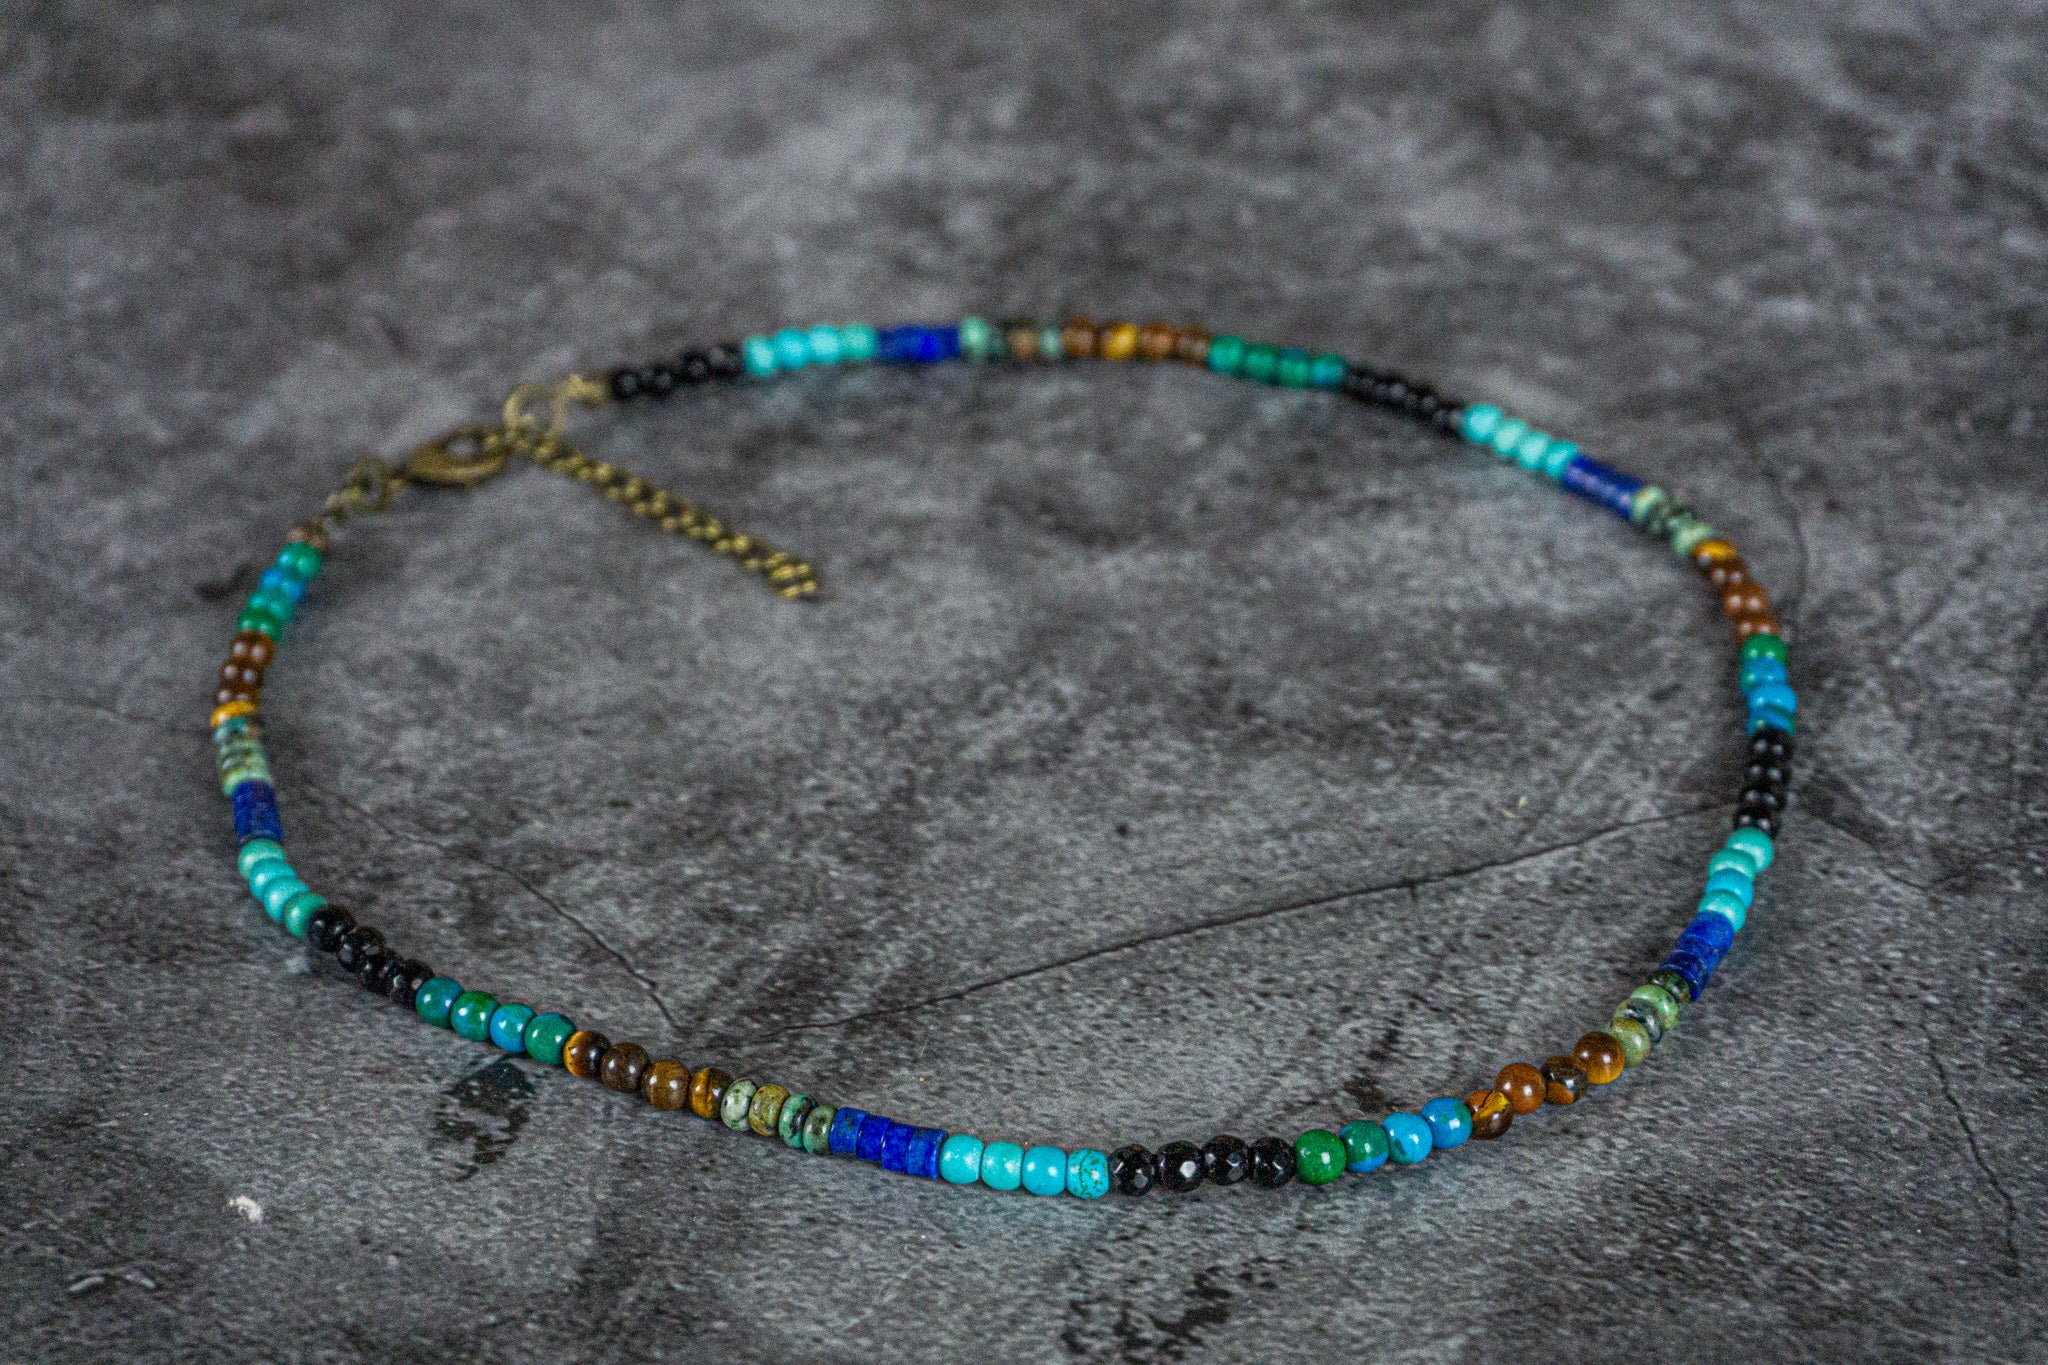  colorful choker necklace made of tuquoise, jade, grren african jasper, lapis lazuli heishi beads, black onyx and tiger eye 4mm gemstone - wander jewellery